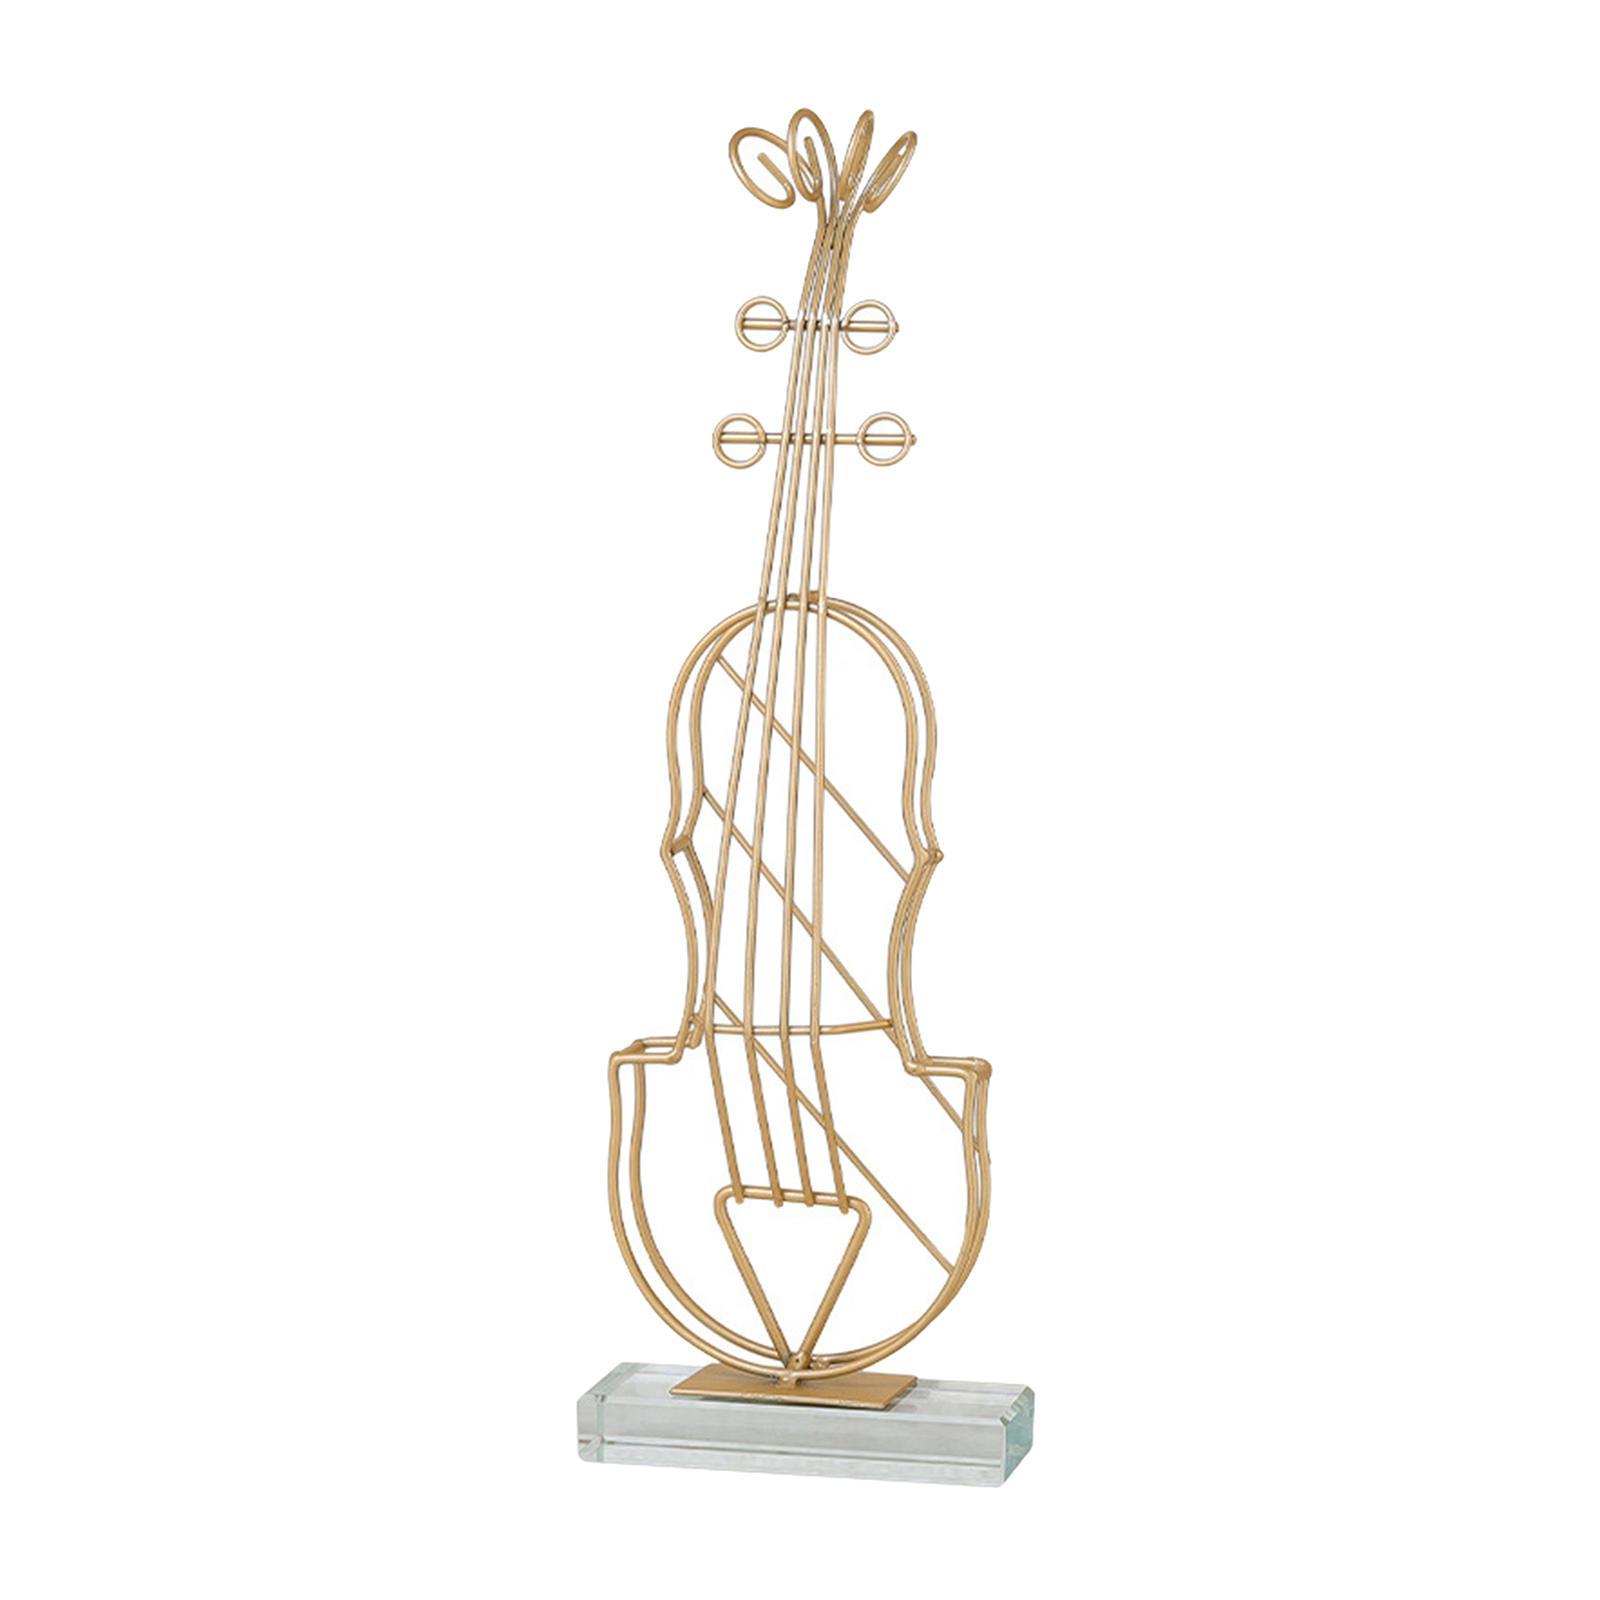 Music Instrument Statue Sculpture Figurine for Home Decor